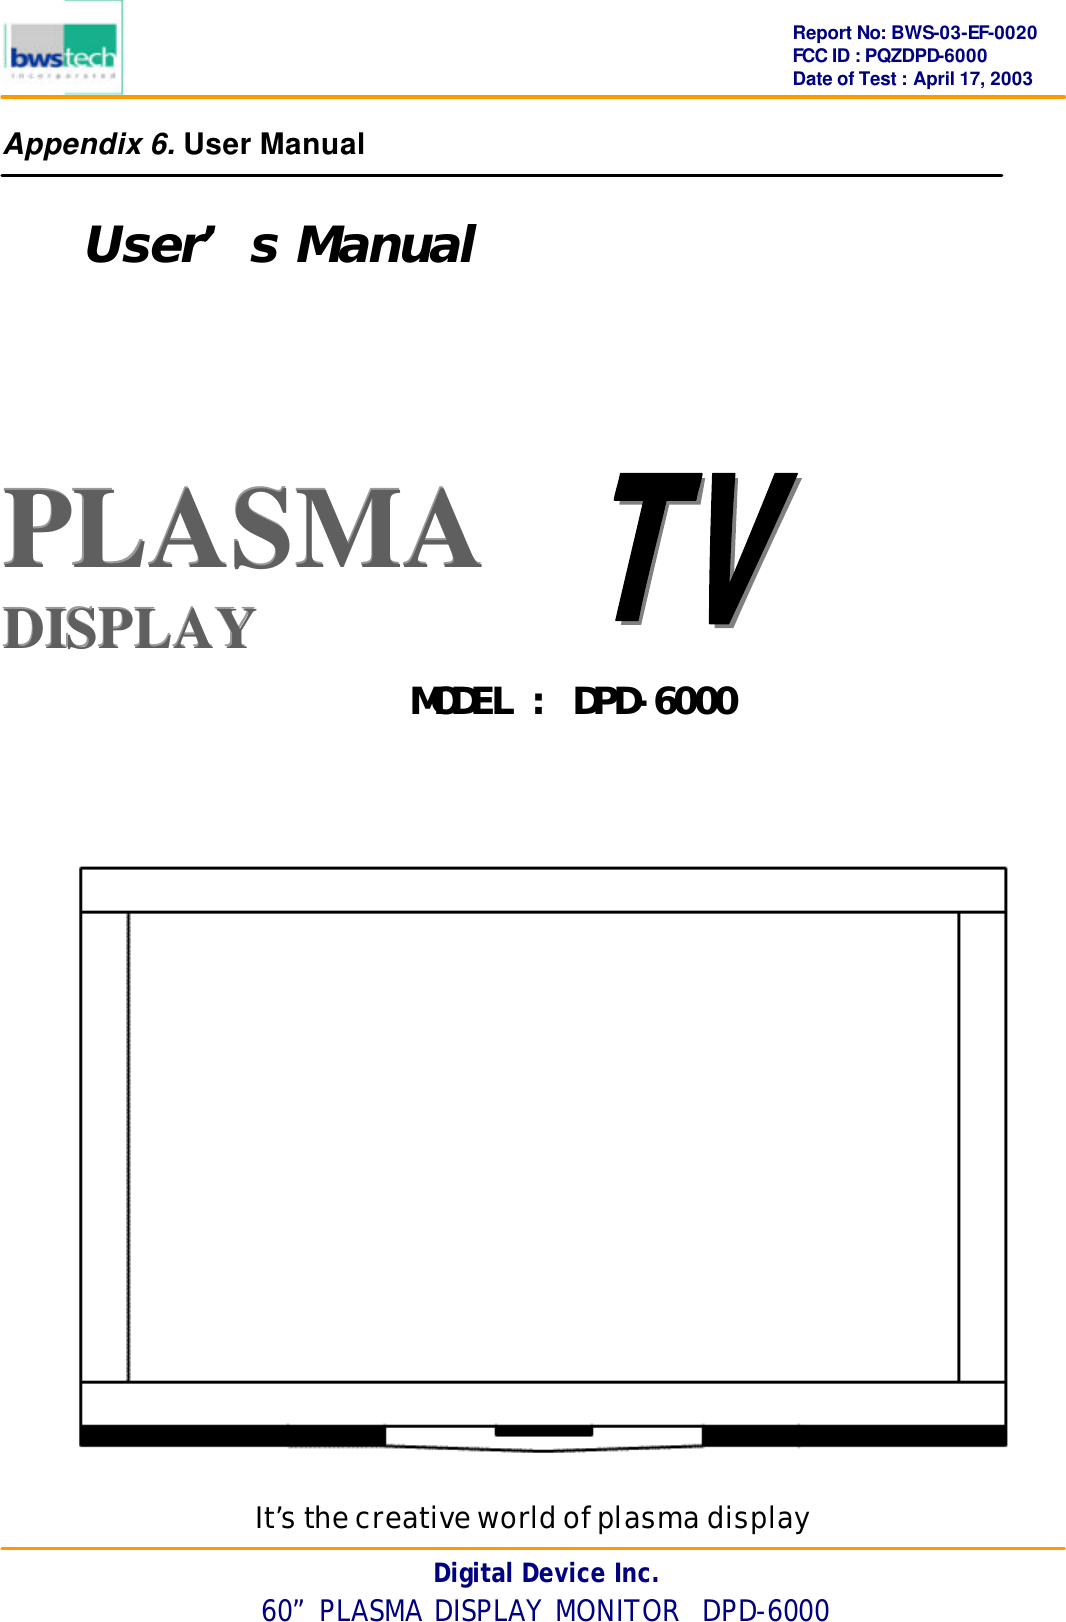      Digital Device Inc. 60” PLASMA DISPLAY MONITOR  DPD-6000 Report No: BWS-03-EF-0020 FCC ID : PQZDPD-6000 Date of Test : April 17, 2003 Appendix 6. User Manual  User’s Manual   PPPLLLAAASSSMMMAAA   DDDIIISSSPPPLLLAAAYYY         It’s the creative world of plasma display MODEL : DPD-6000 